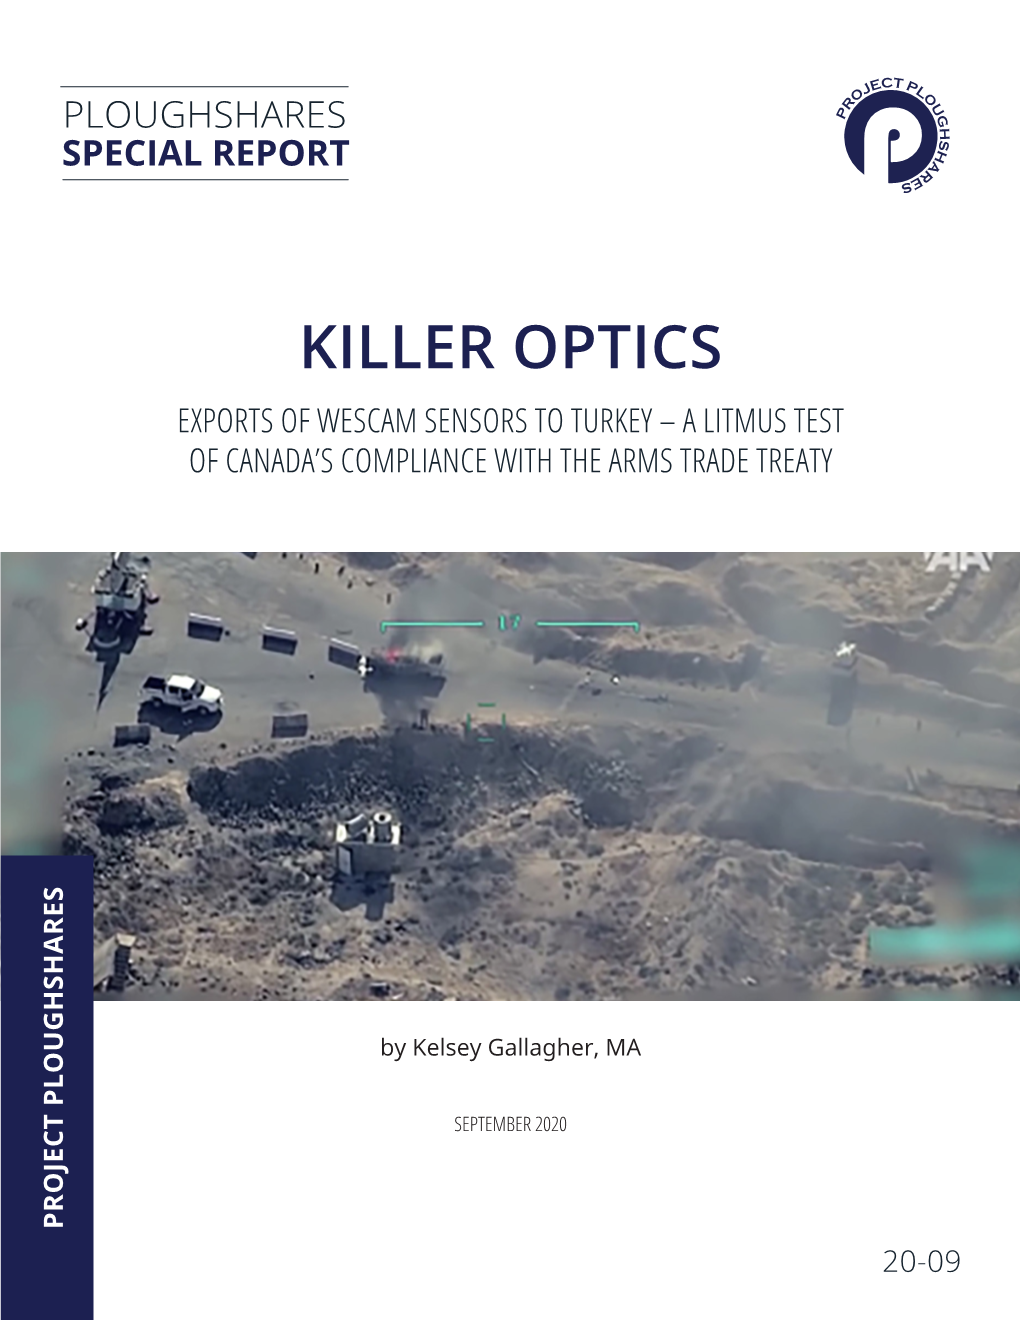 SPECIAL REPORT – Killer Optics: Exports of WESCAM Sensors to Turkey